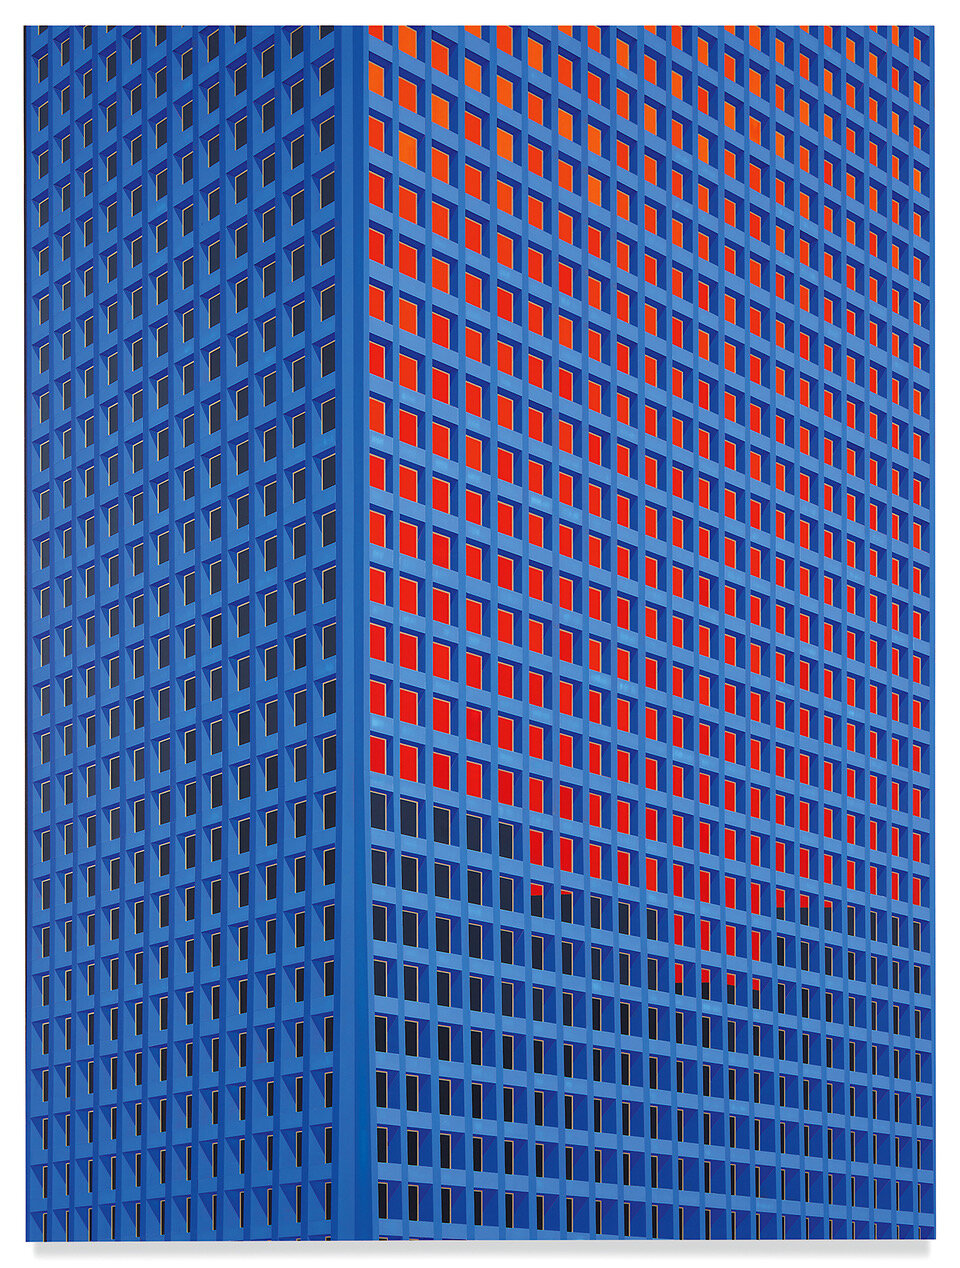 Tower, Houston, 2020. Acrylic on Dibond, 78 3/4 x 59" / 200 x 150 cm